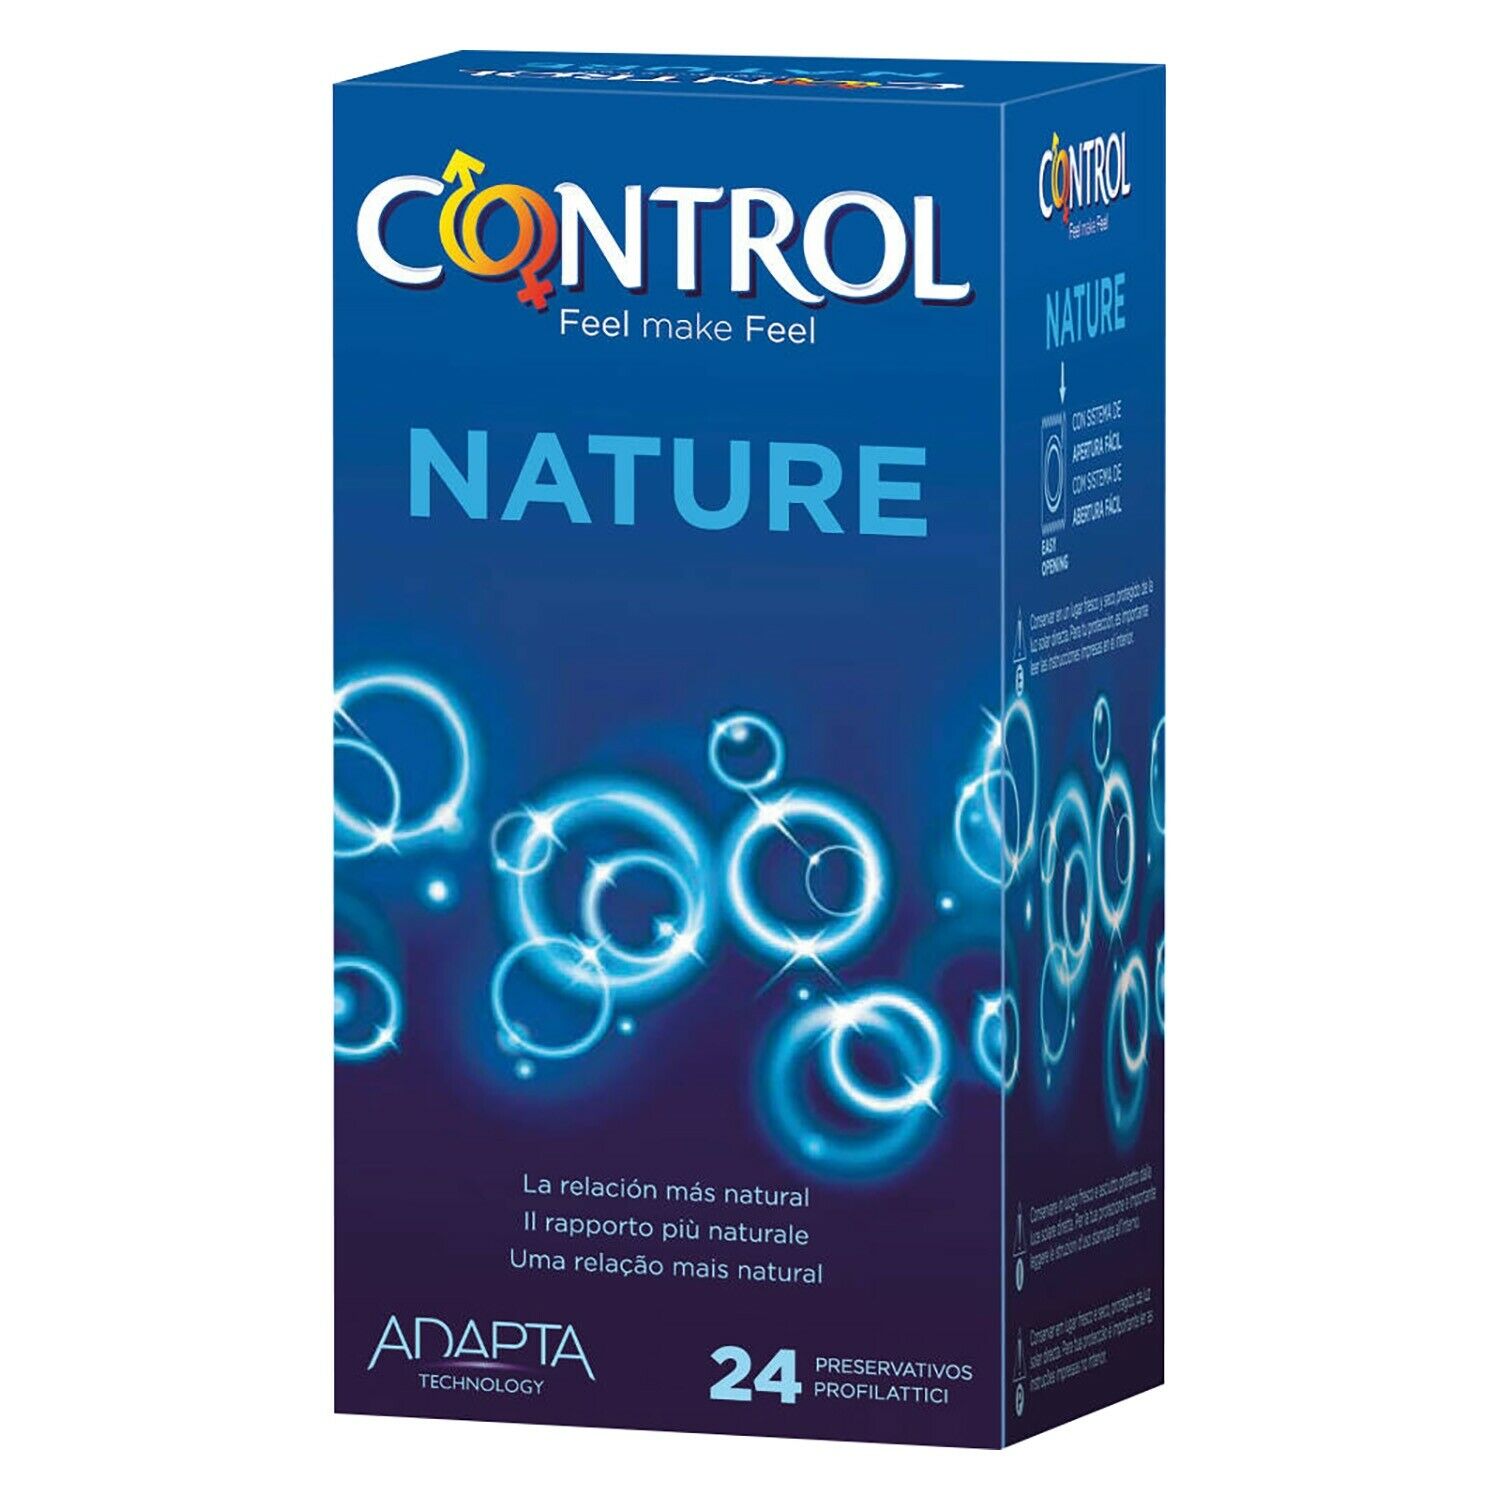 CONTROL NATURE PRESERVATIVO X 24